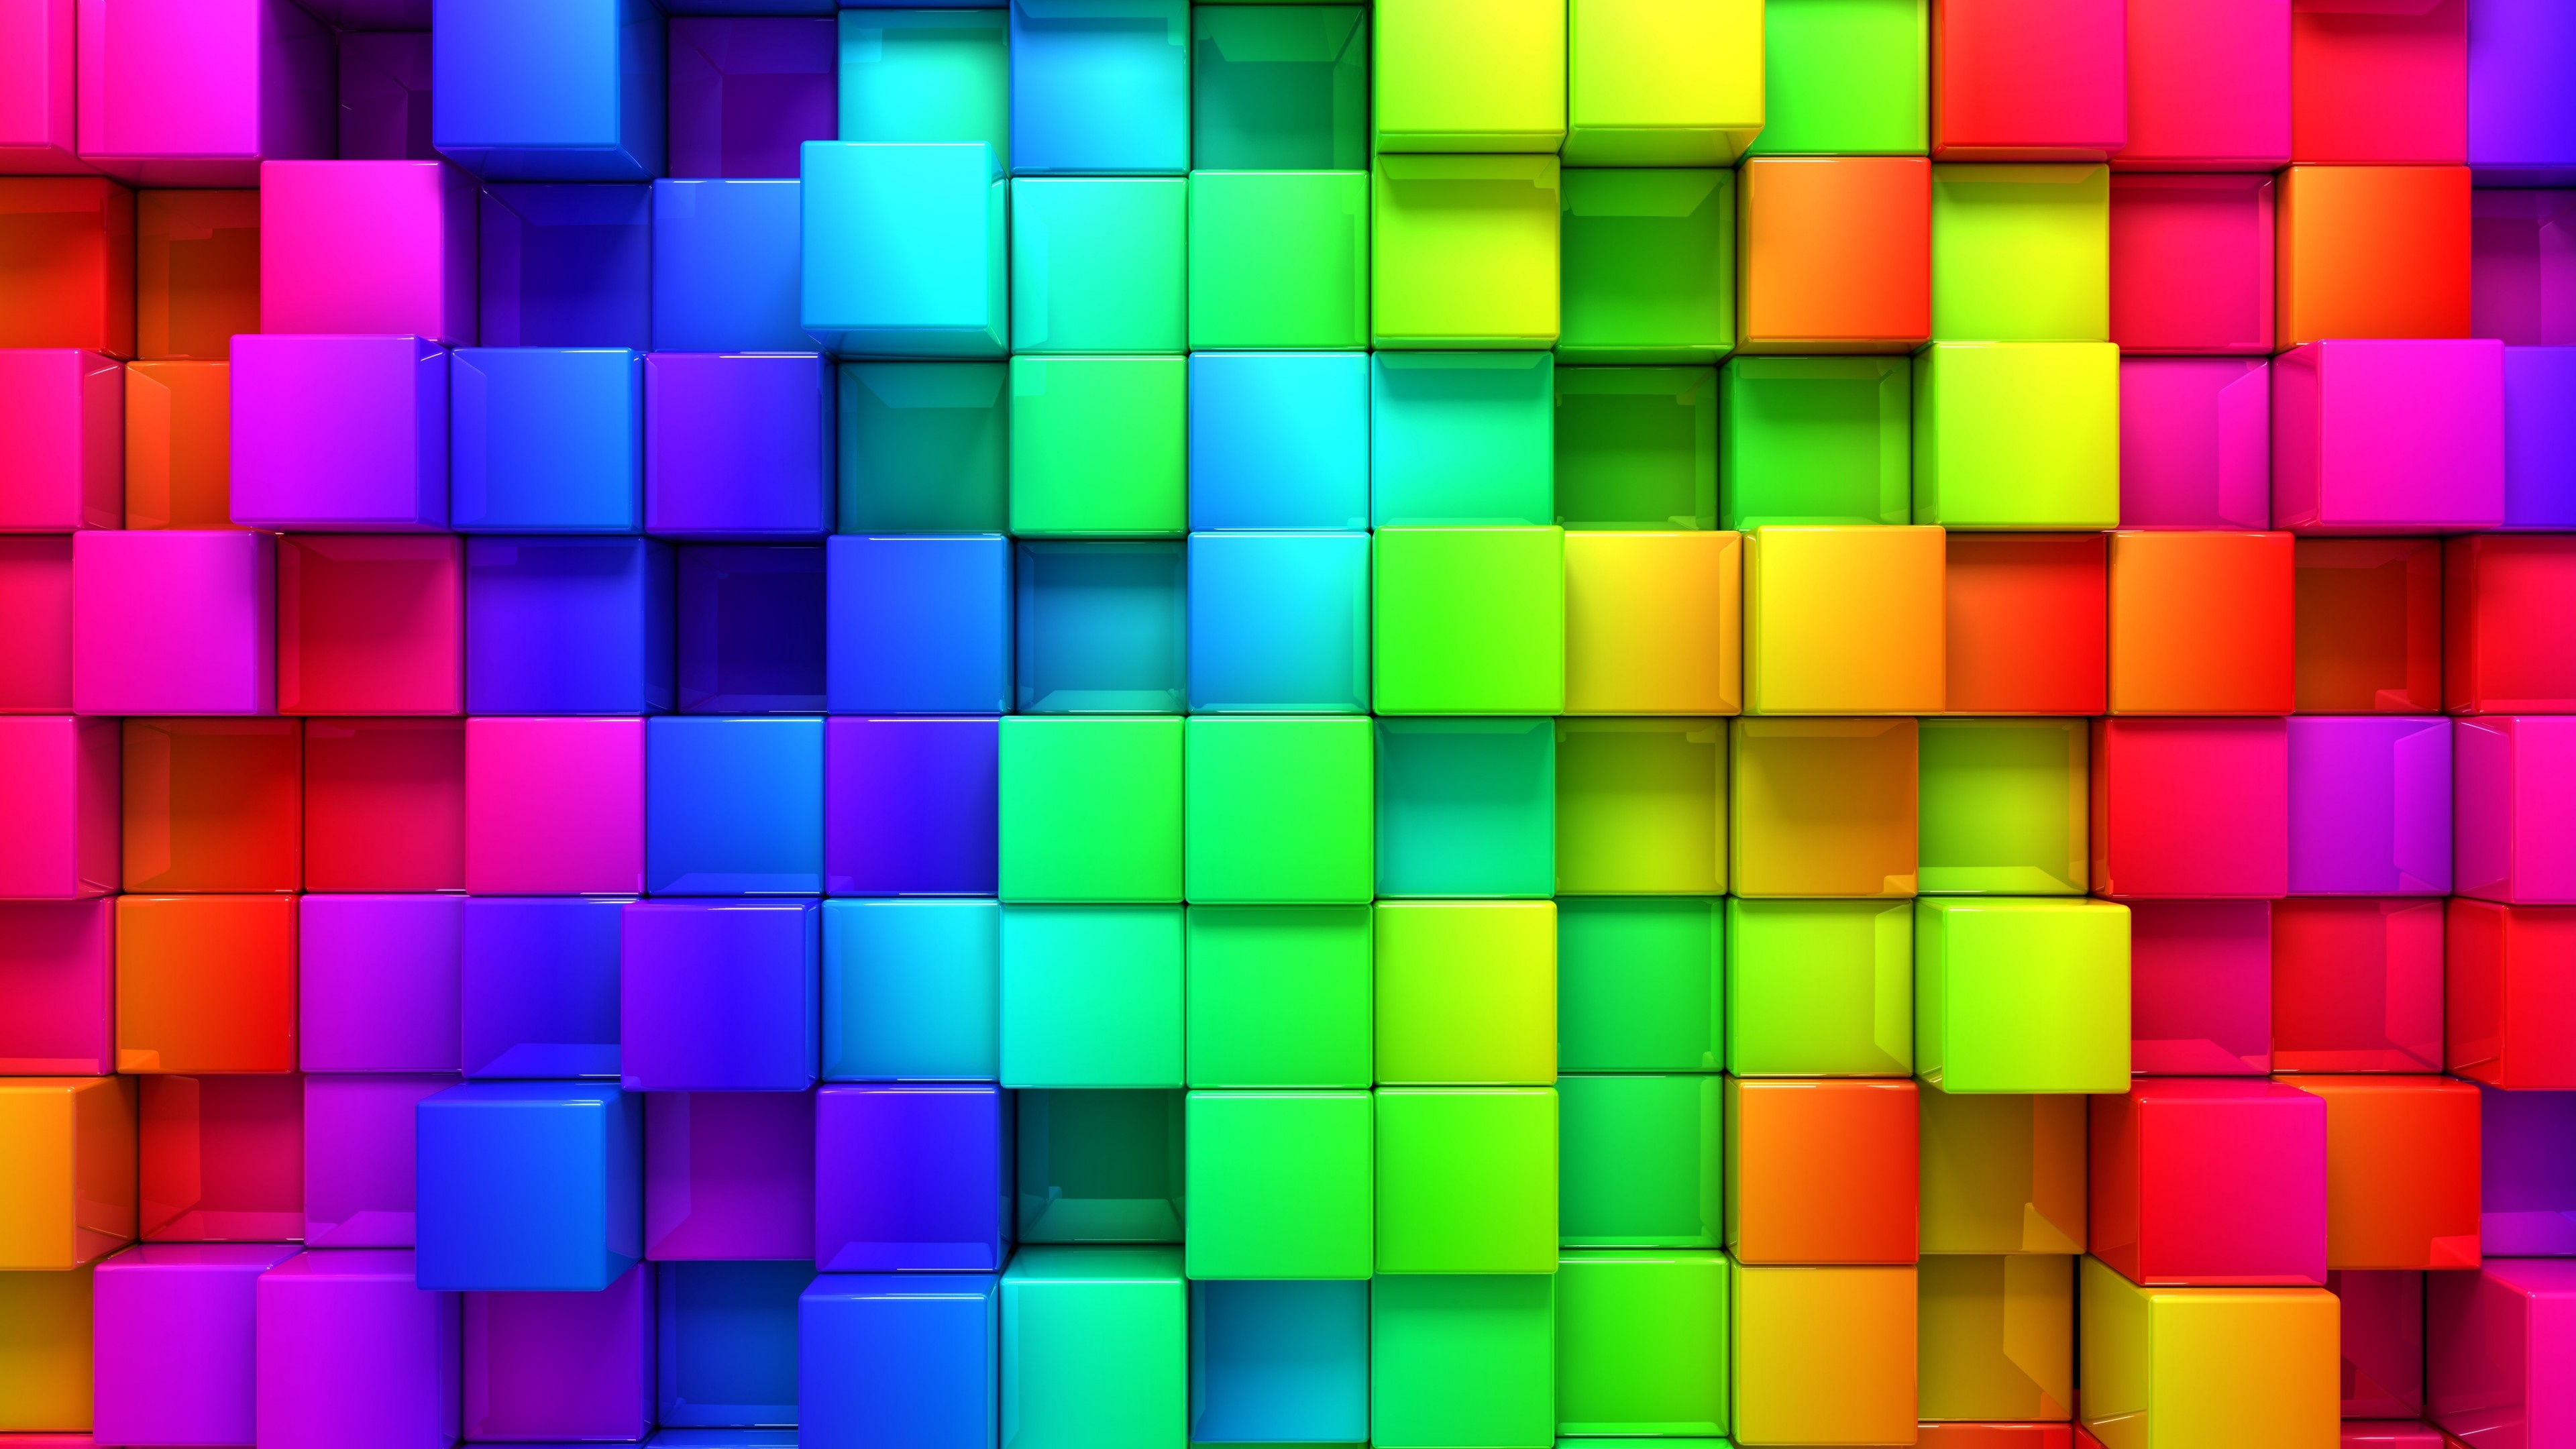 Cube blocks, 4K 5K wallpaper, Rainbow abstract, iPhone wallpaper, Android wallpaper, 3840x2160 4K Desktop